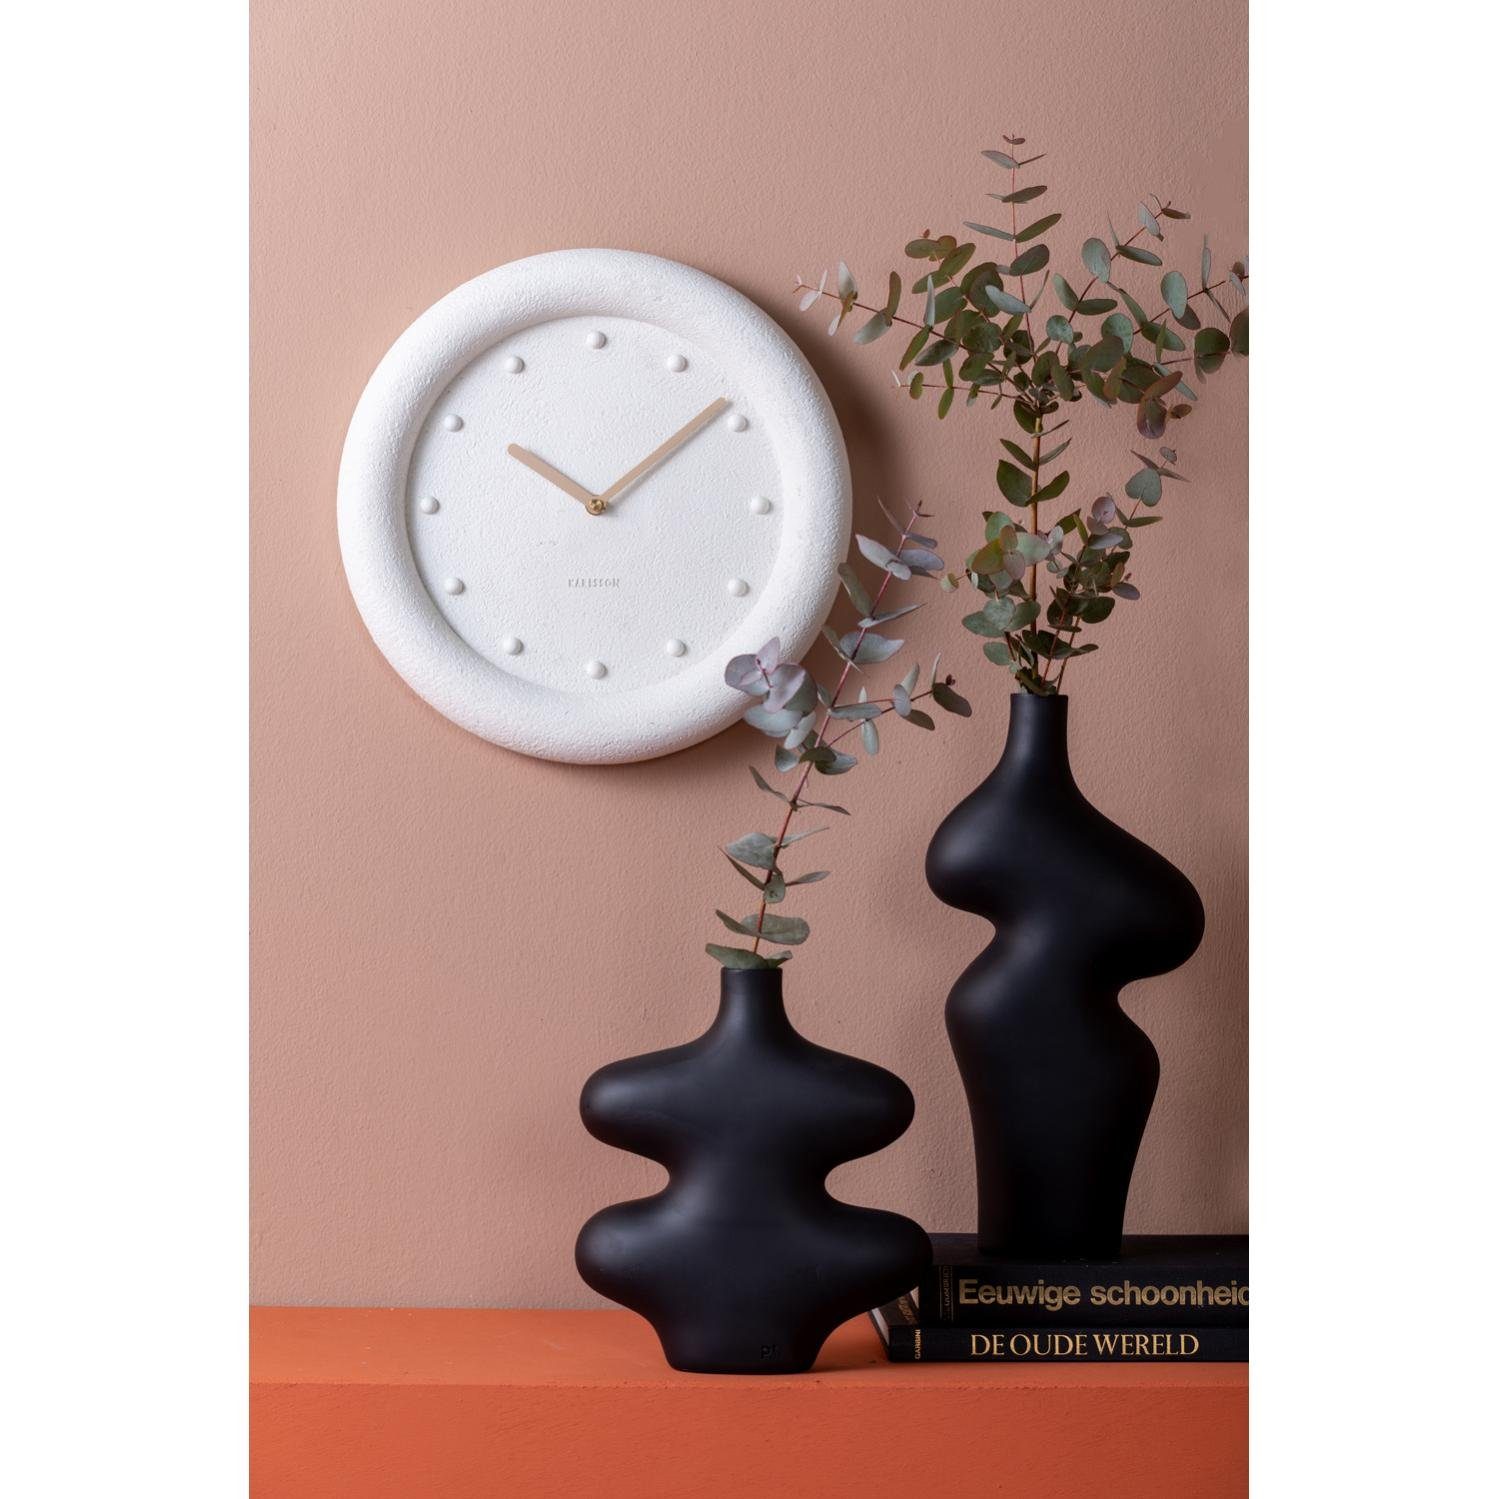 Present Time Dekovase Vase Black (Large) Curves Organic